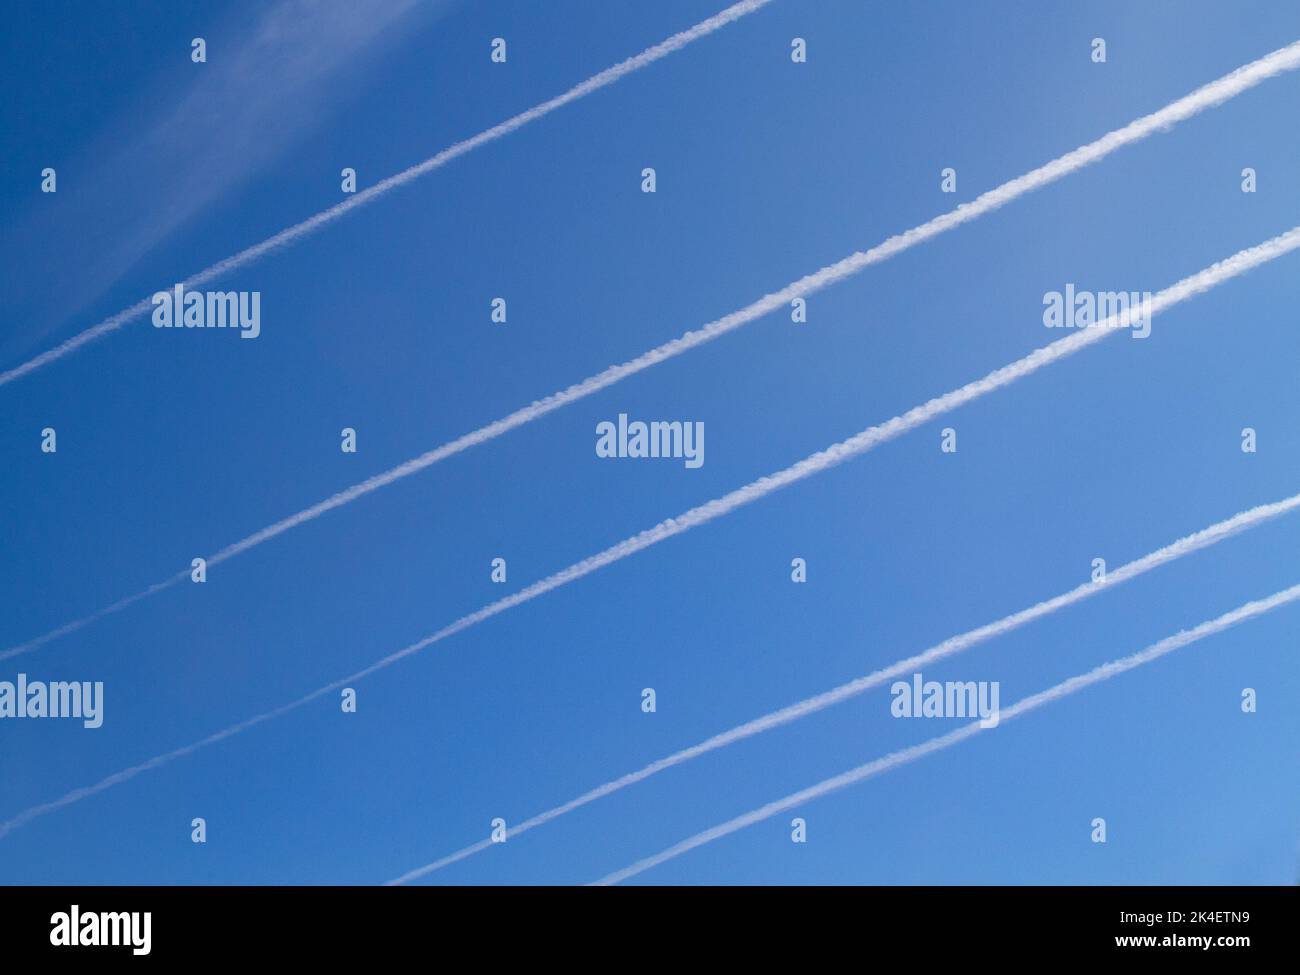 Cinco pistas paralelas de condensación, estelas de vapor o estelas de vapor en un cielo azul Foto de stock